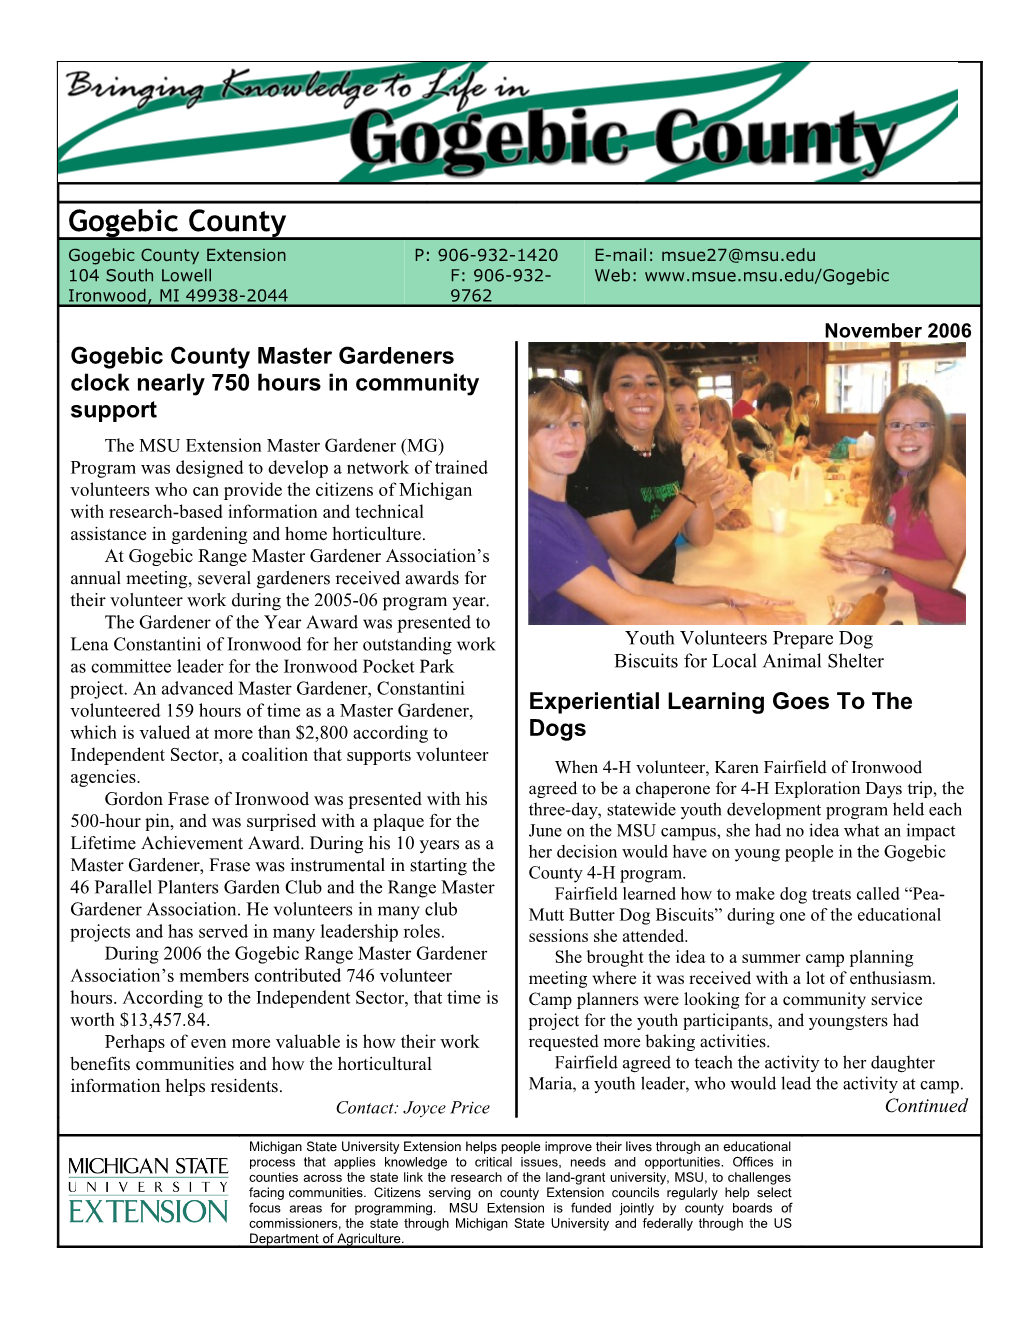 According to a Recent Survey of Program Participants, Gogebic County MSU Extension Nutrition